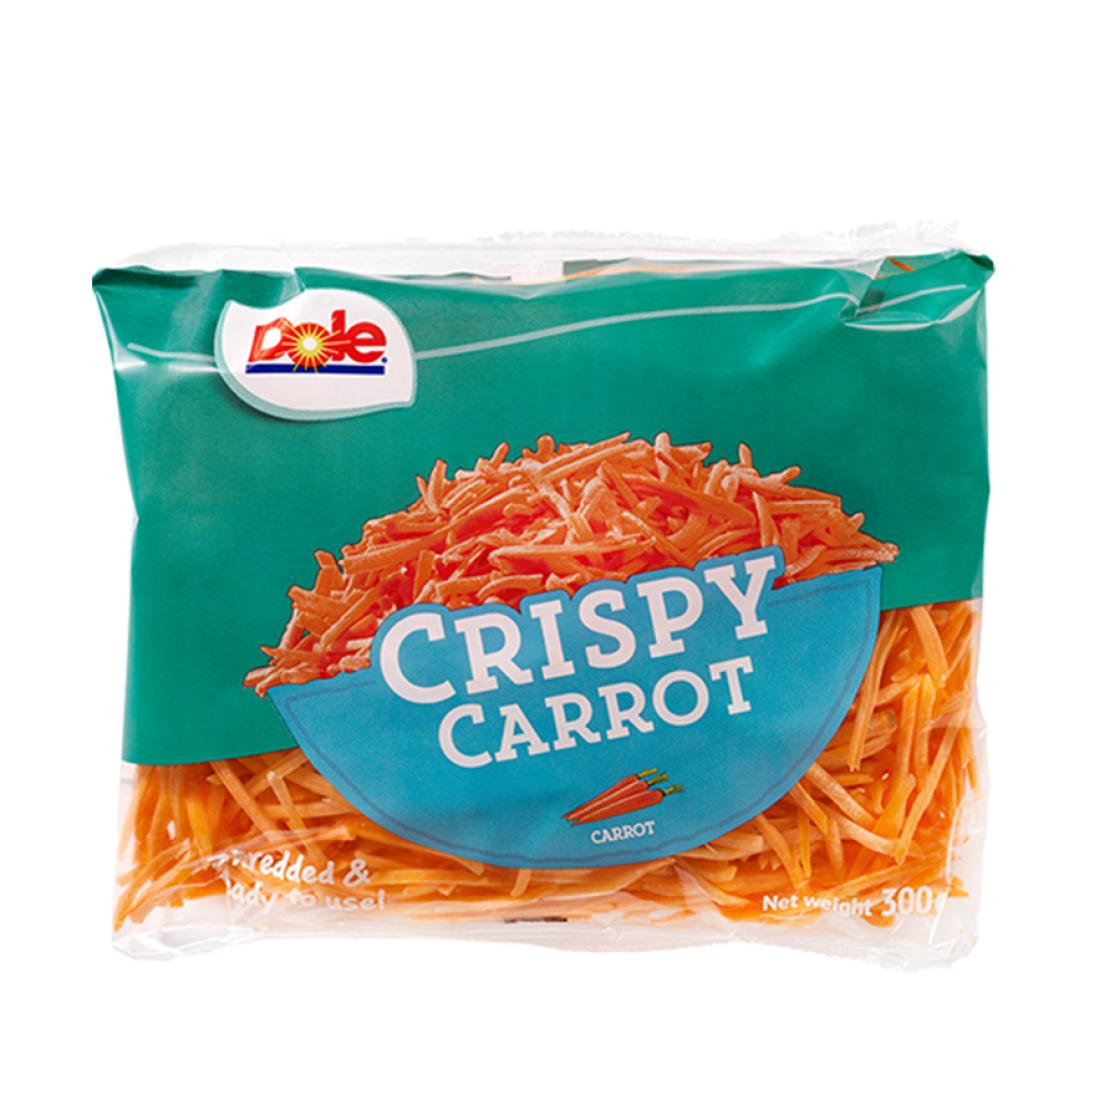 Crispy carrot 900x900px